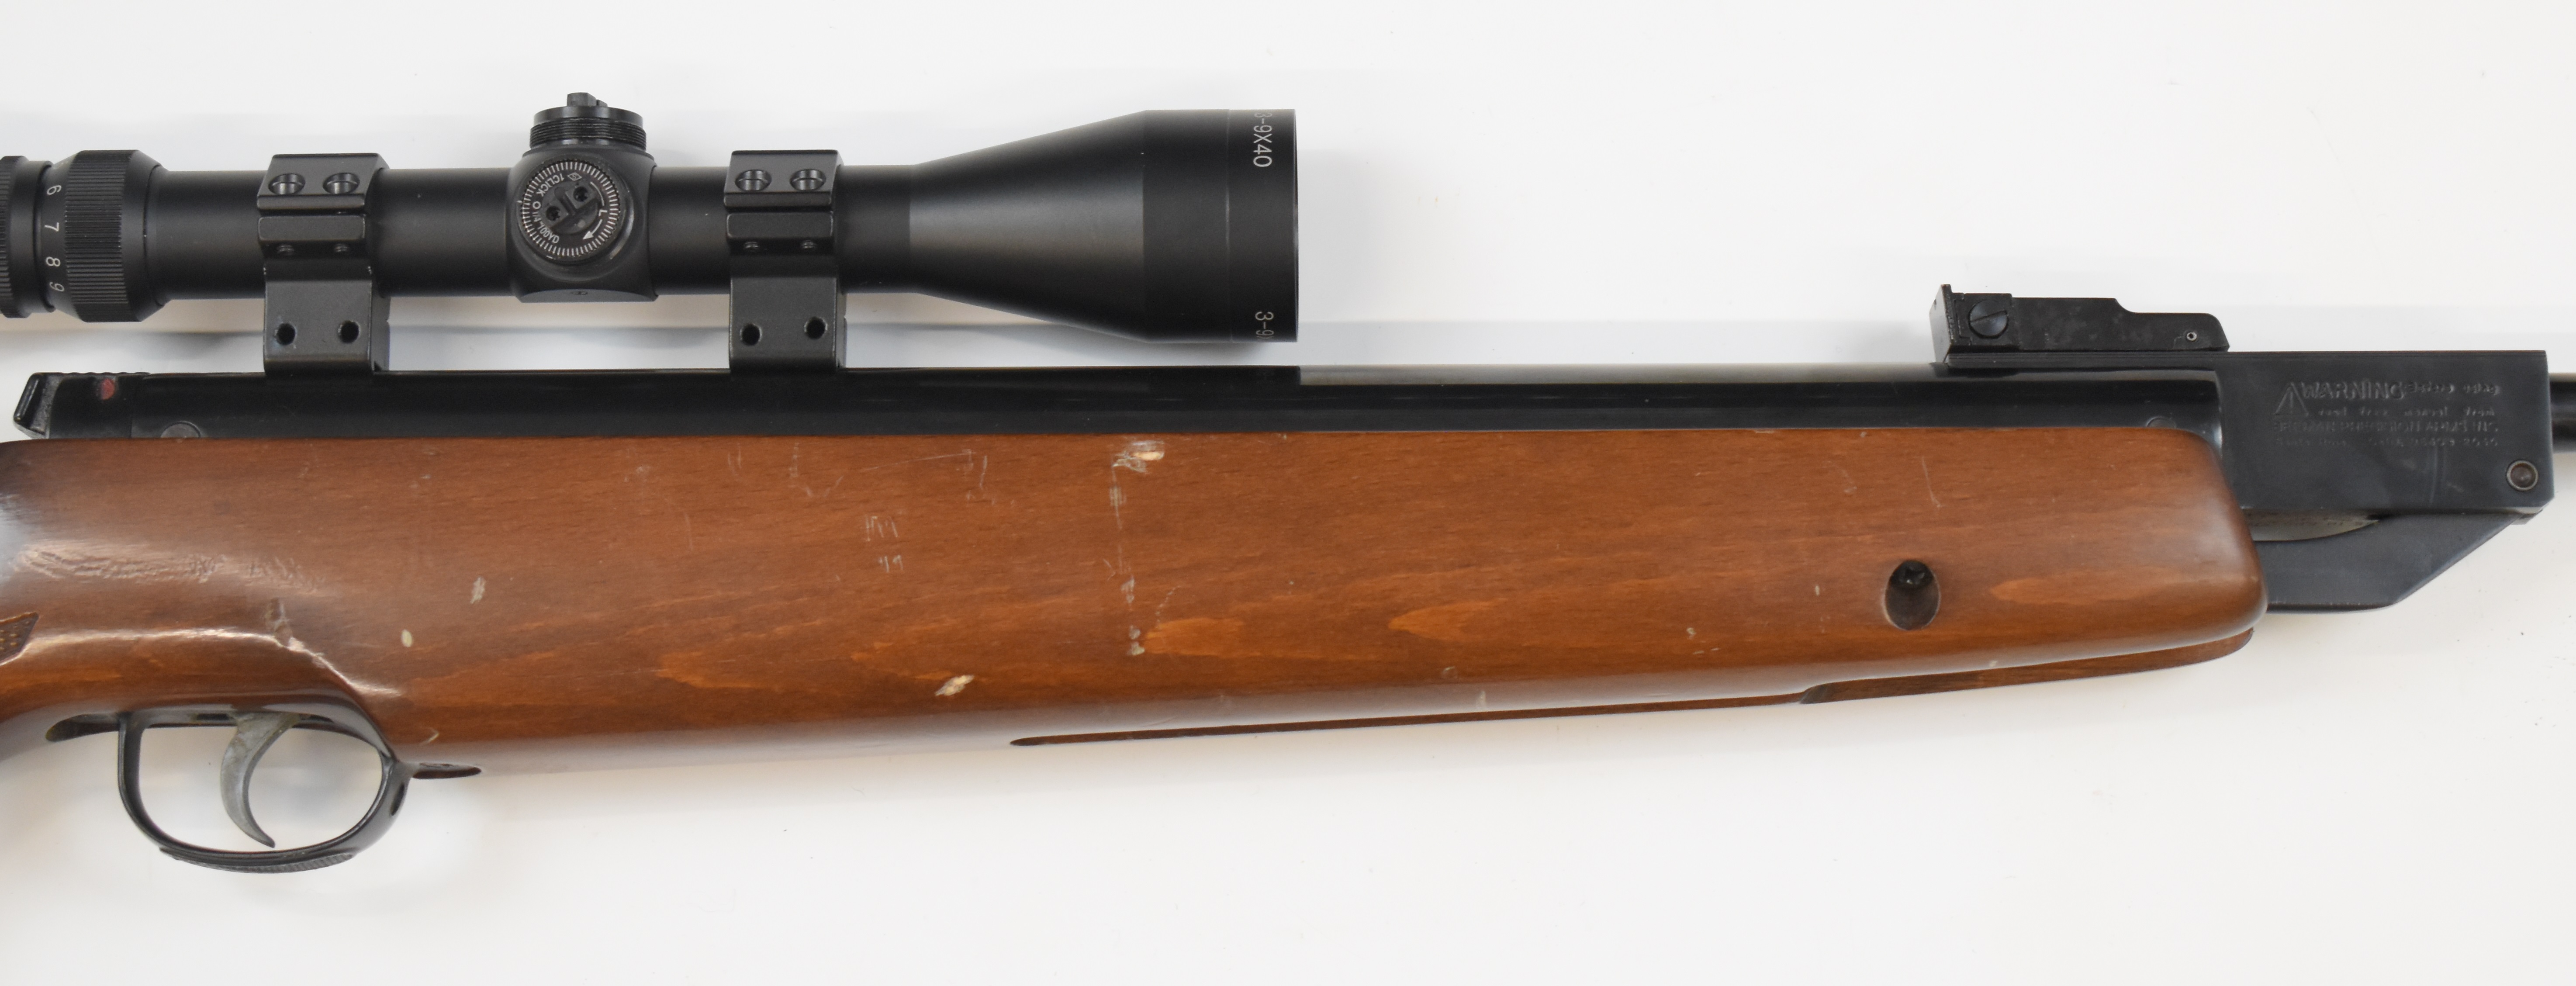 Beeman Kodiak .25 FAC air rifle with chequered semi-pistol grip, raised cheek piece, adjustable - Image 4 of 10